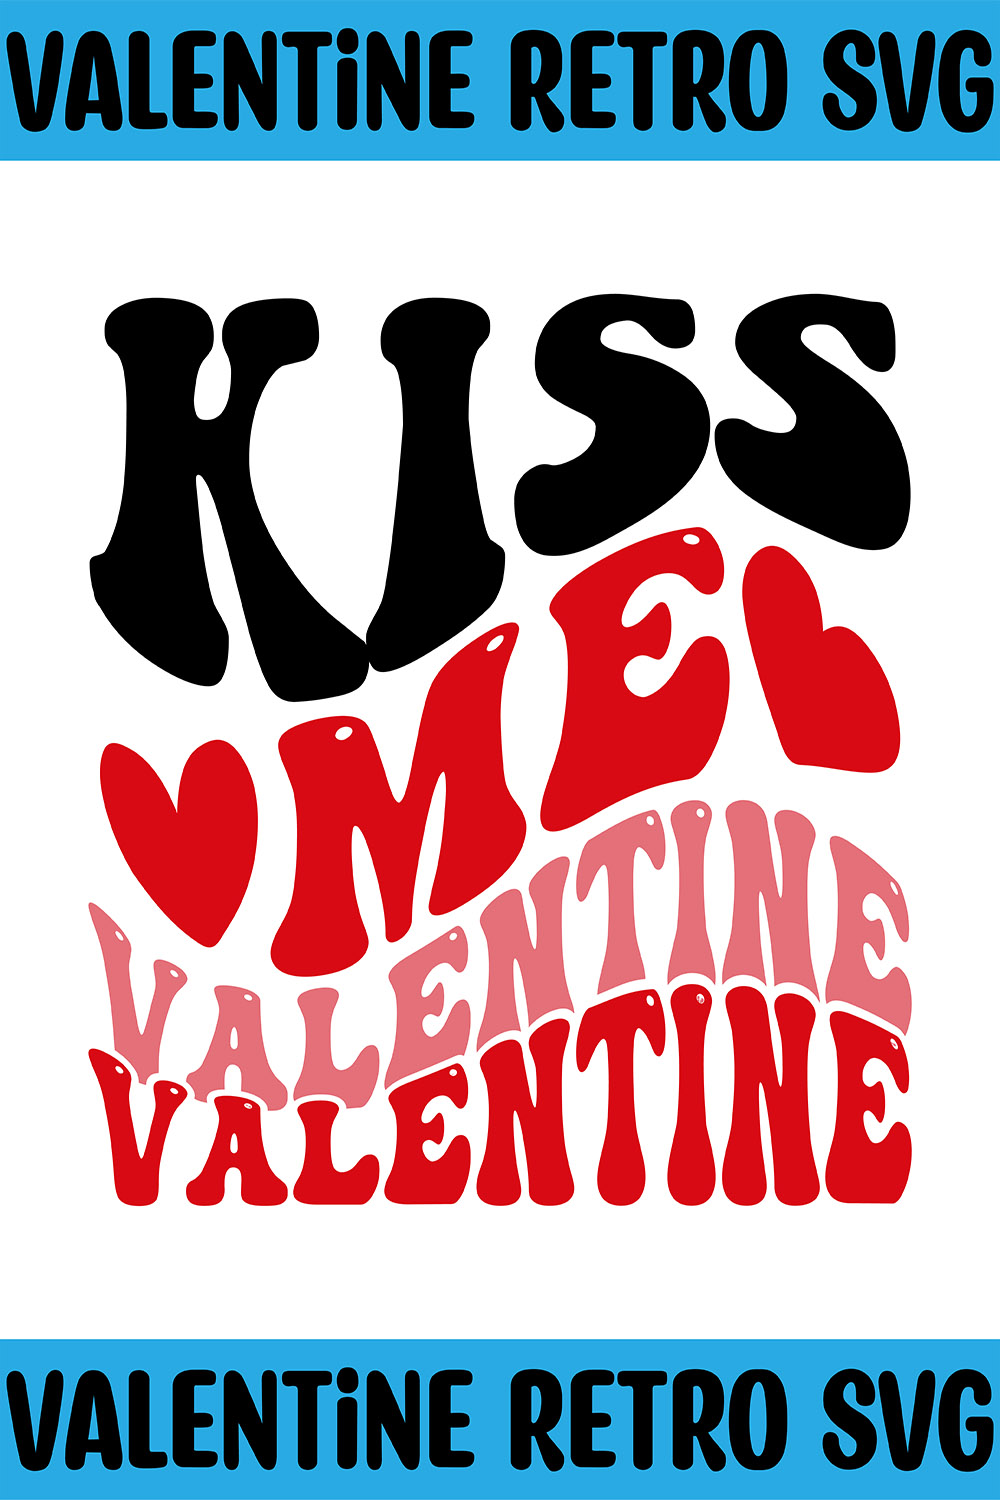 Kiss Me Valentine Retro SVG pinterest preview image.